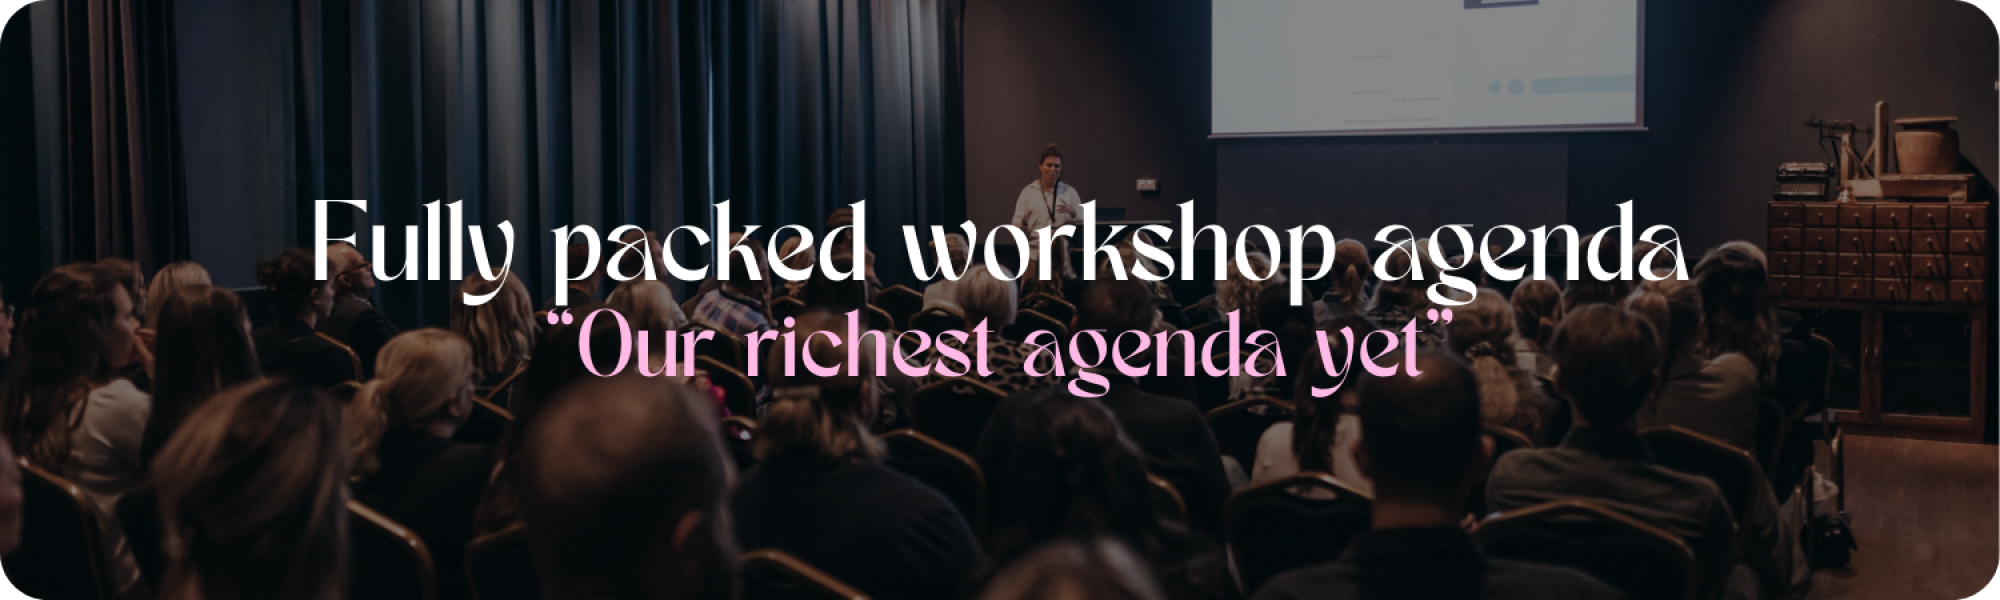 fully-packed-workshop-agenda